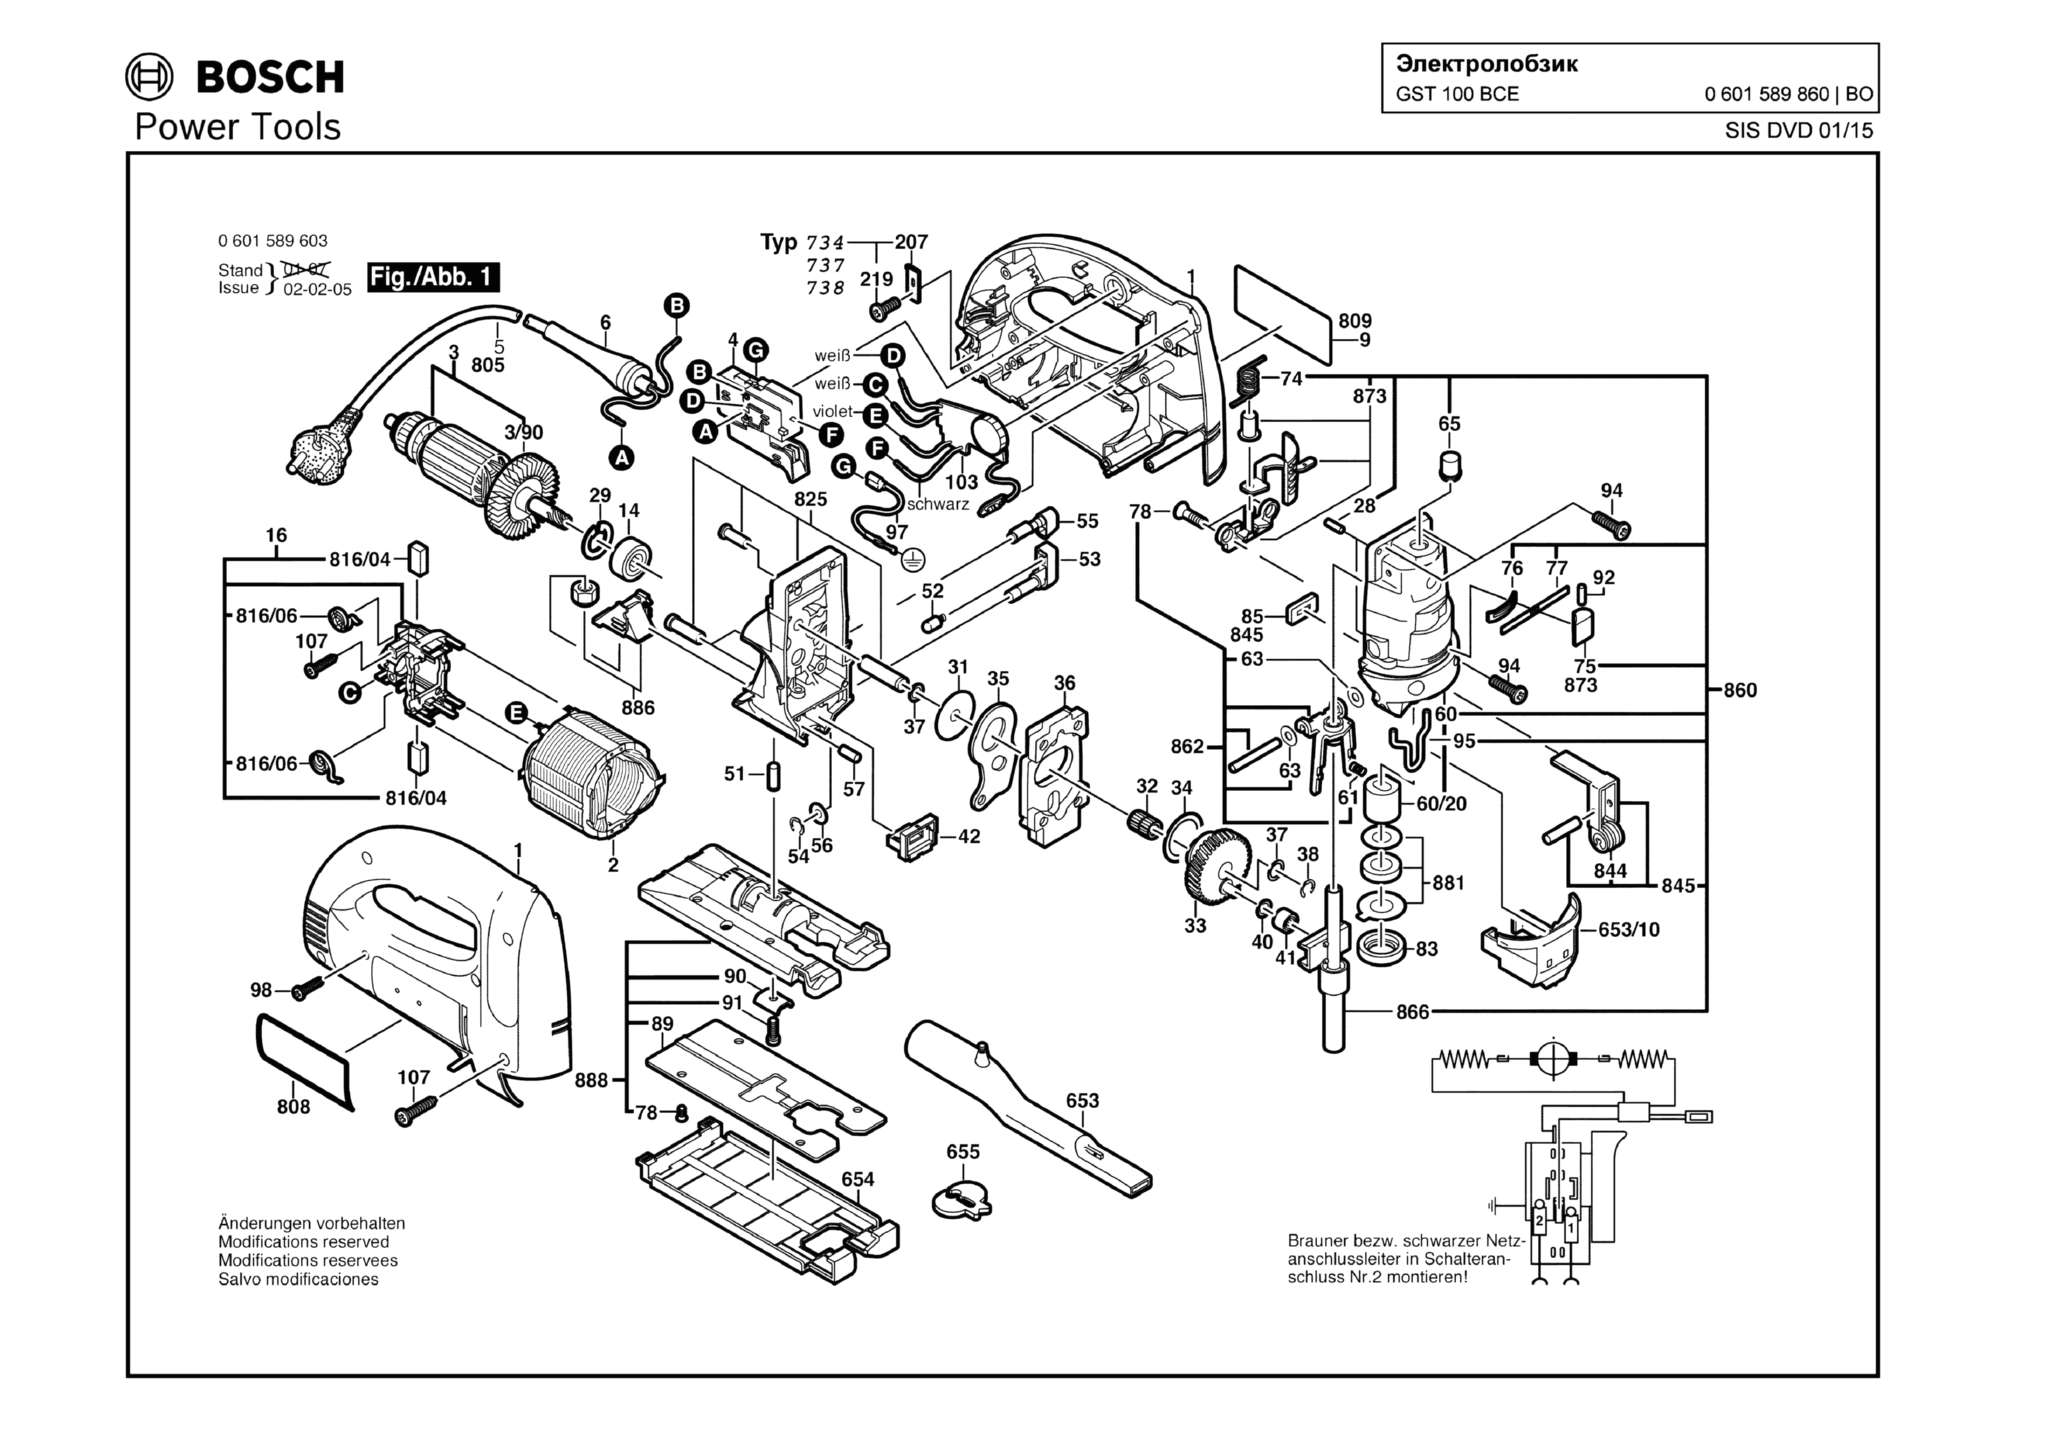 Запчасти, схема и деталировка Bosch GST 100 BCE (ТИП 0601589860)